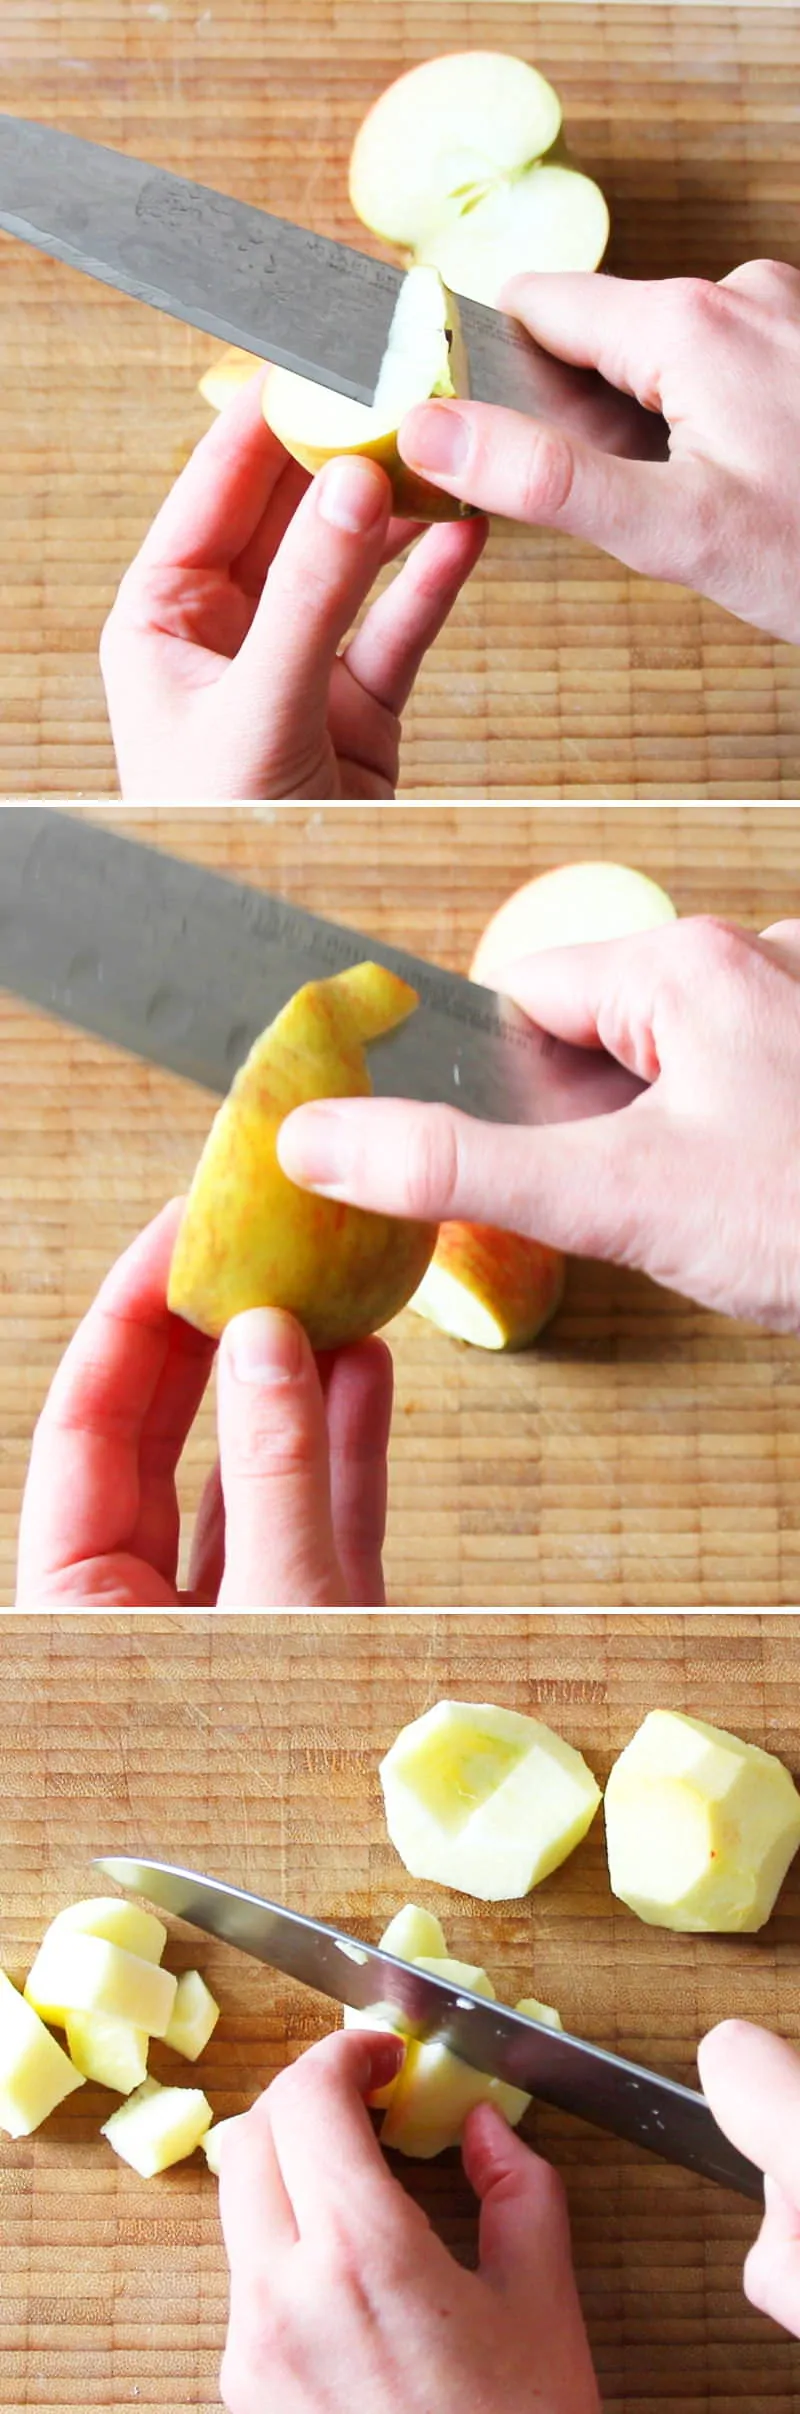 Teppanyaki Grillsauce Schritt 2 Apfel schneiden